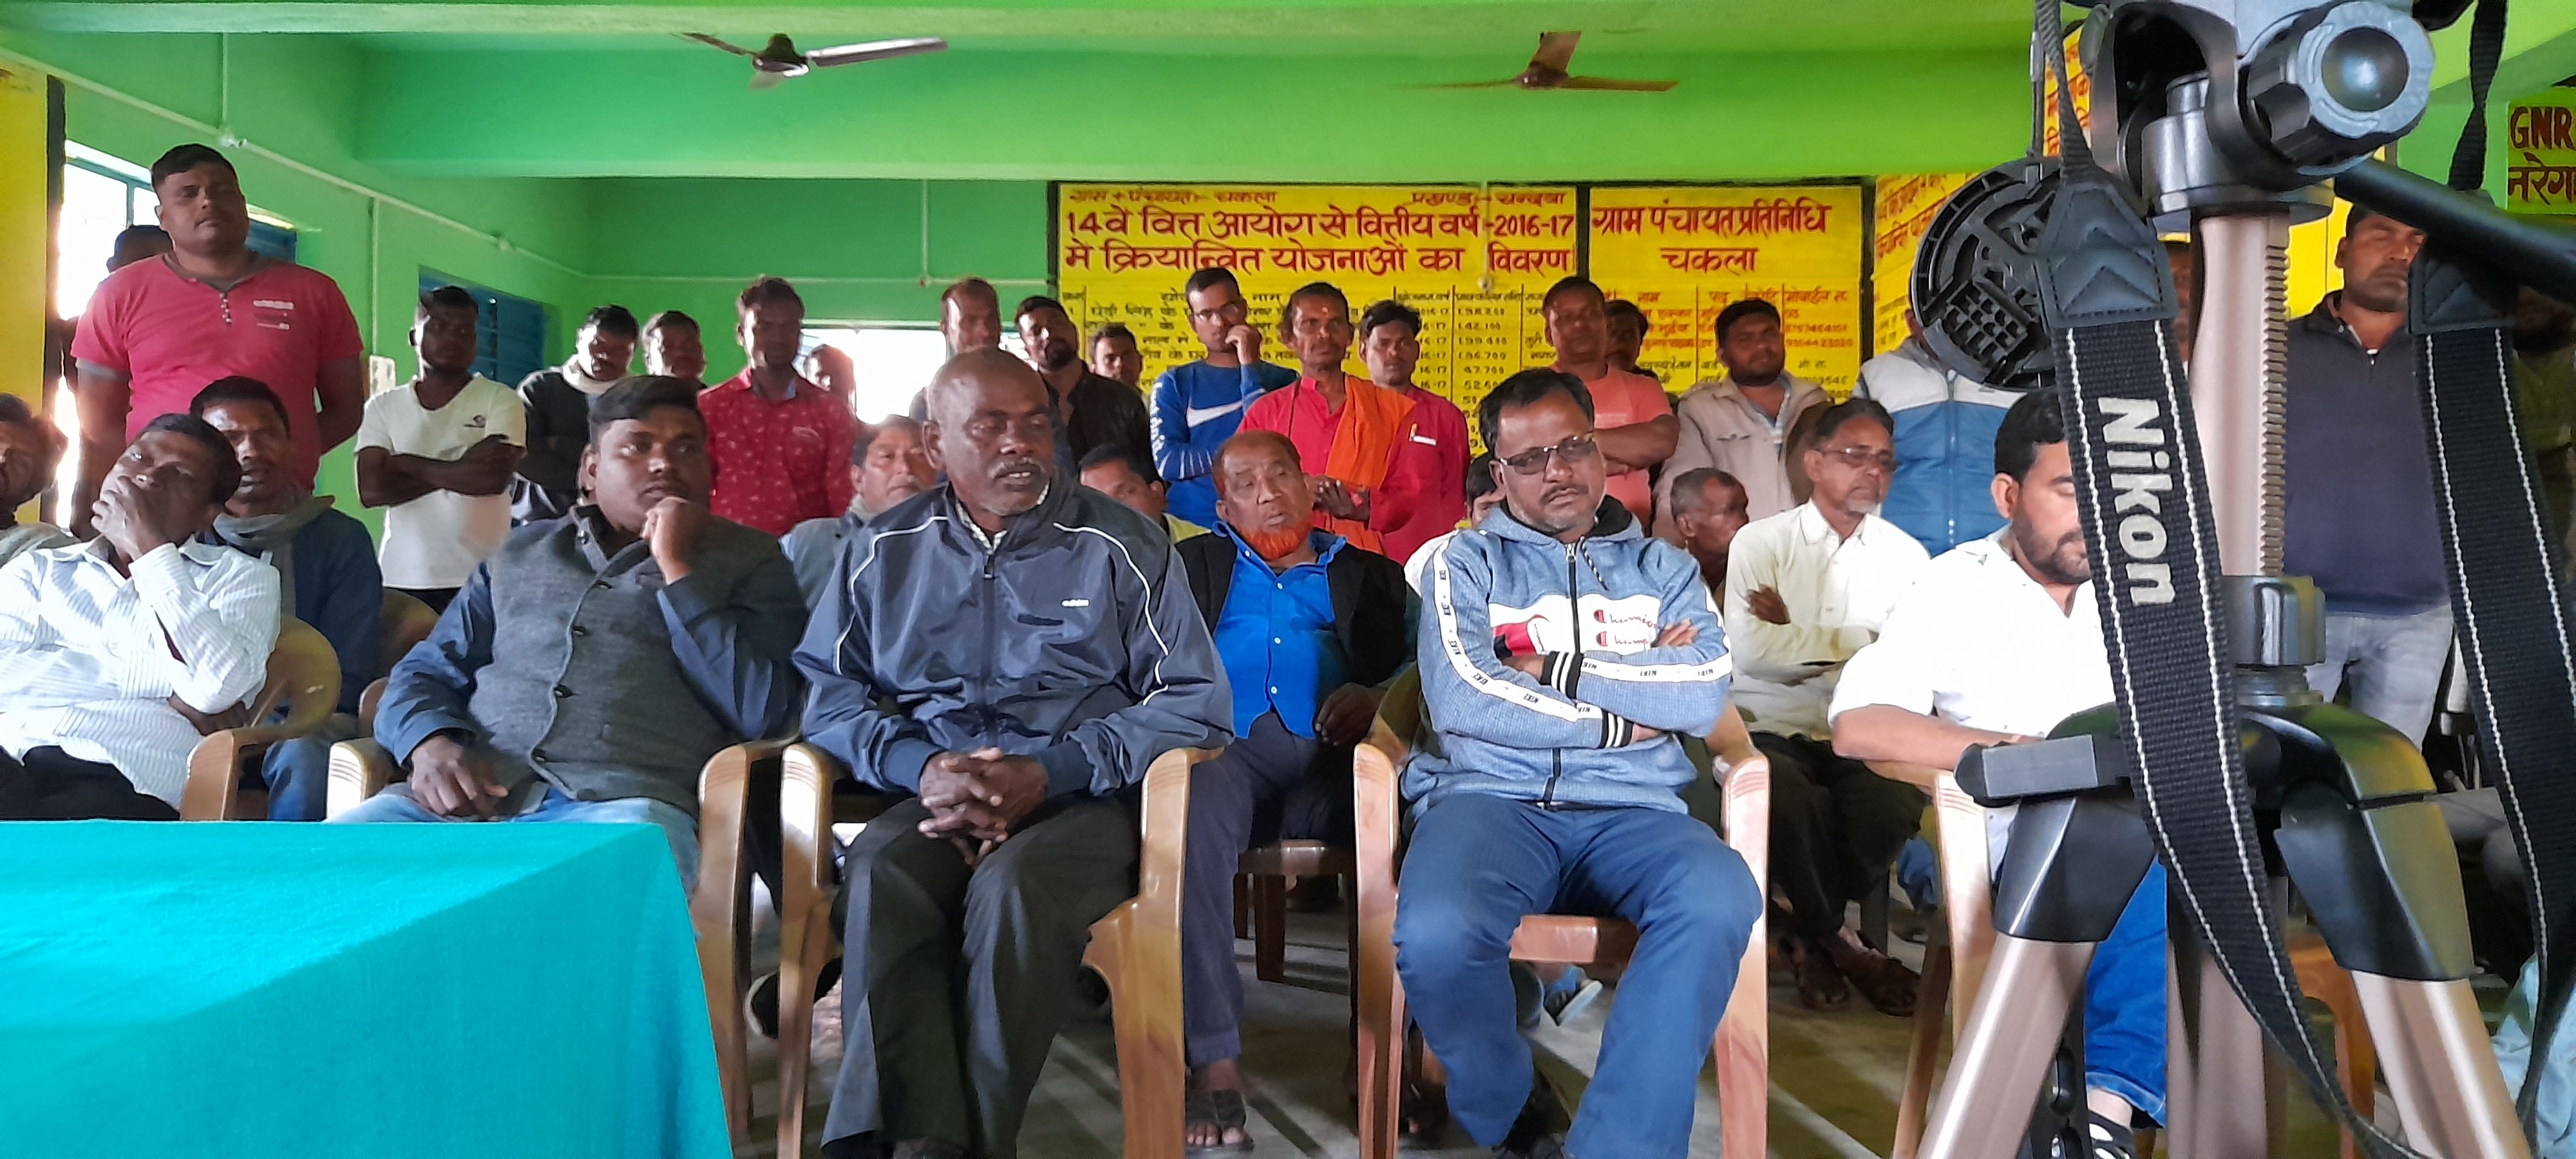 a group of men seated at a local panchayat meeting